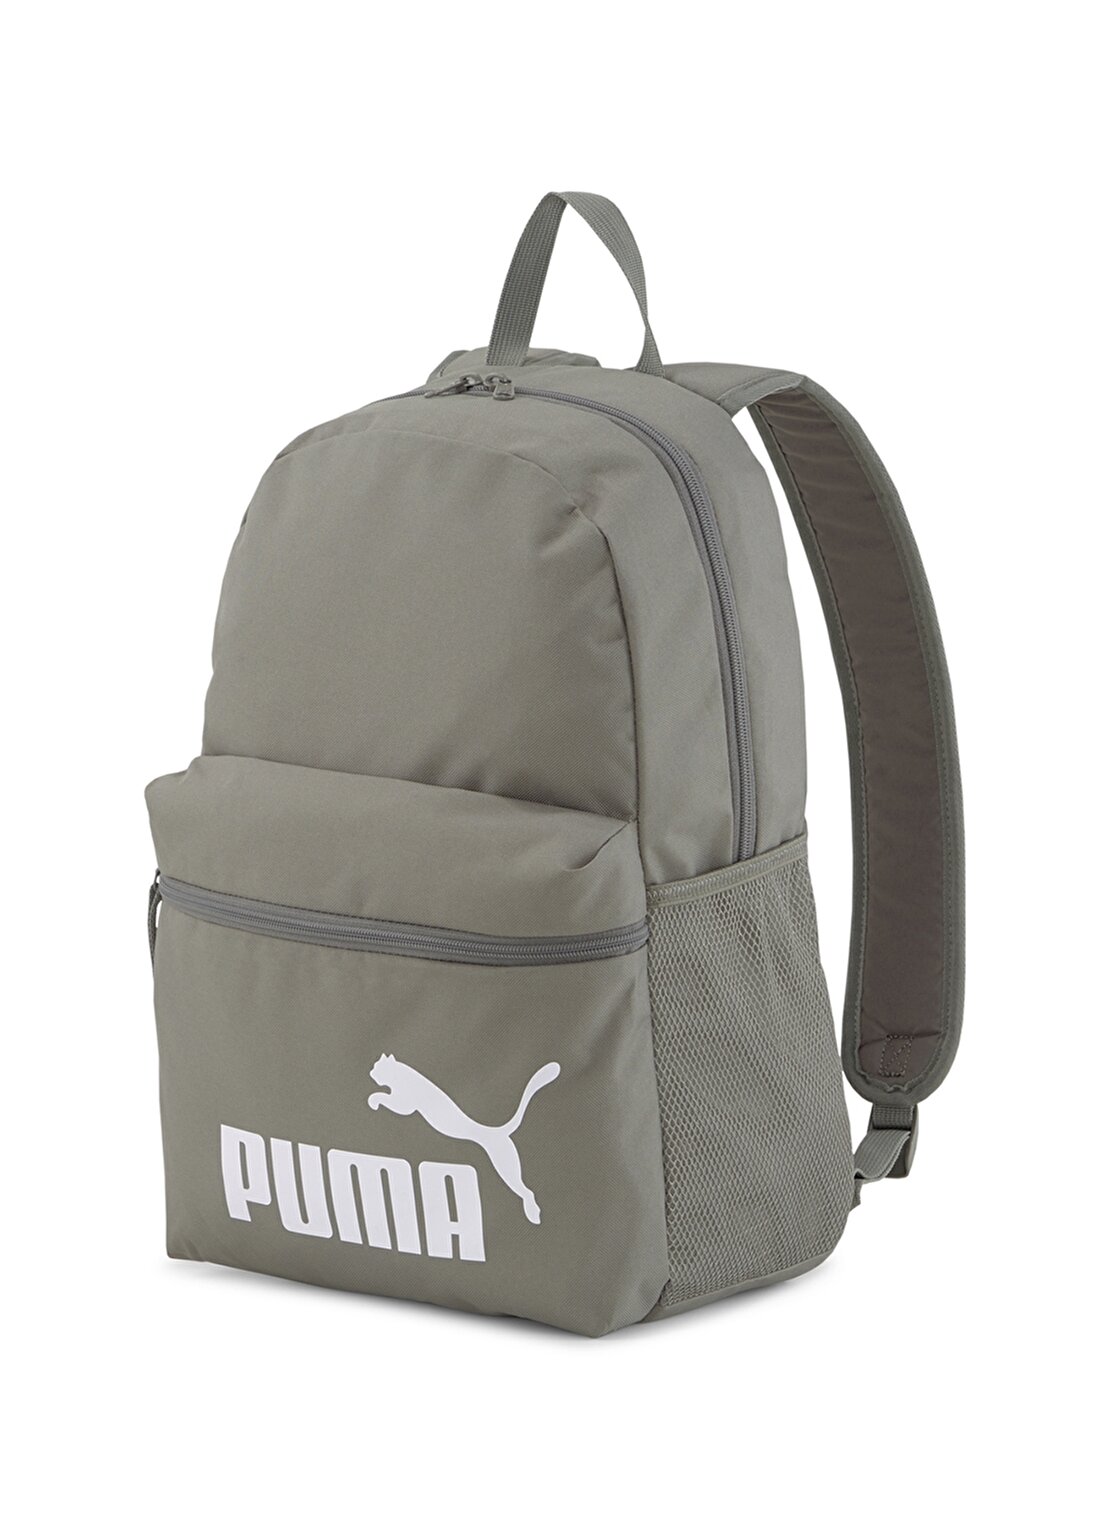 Puma Phase Backpack Çift Fermuar Kapatmalı Unisex Gri Sırt Çantası